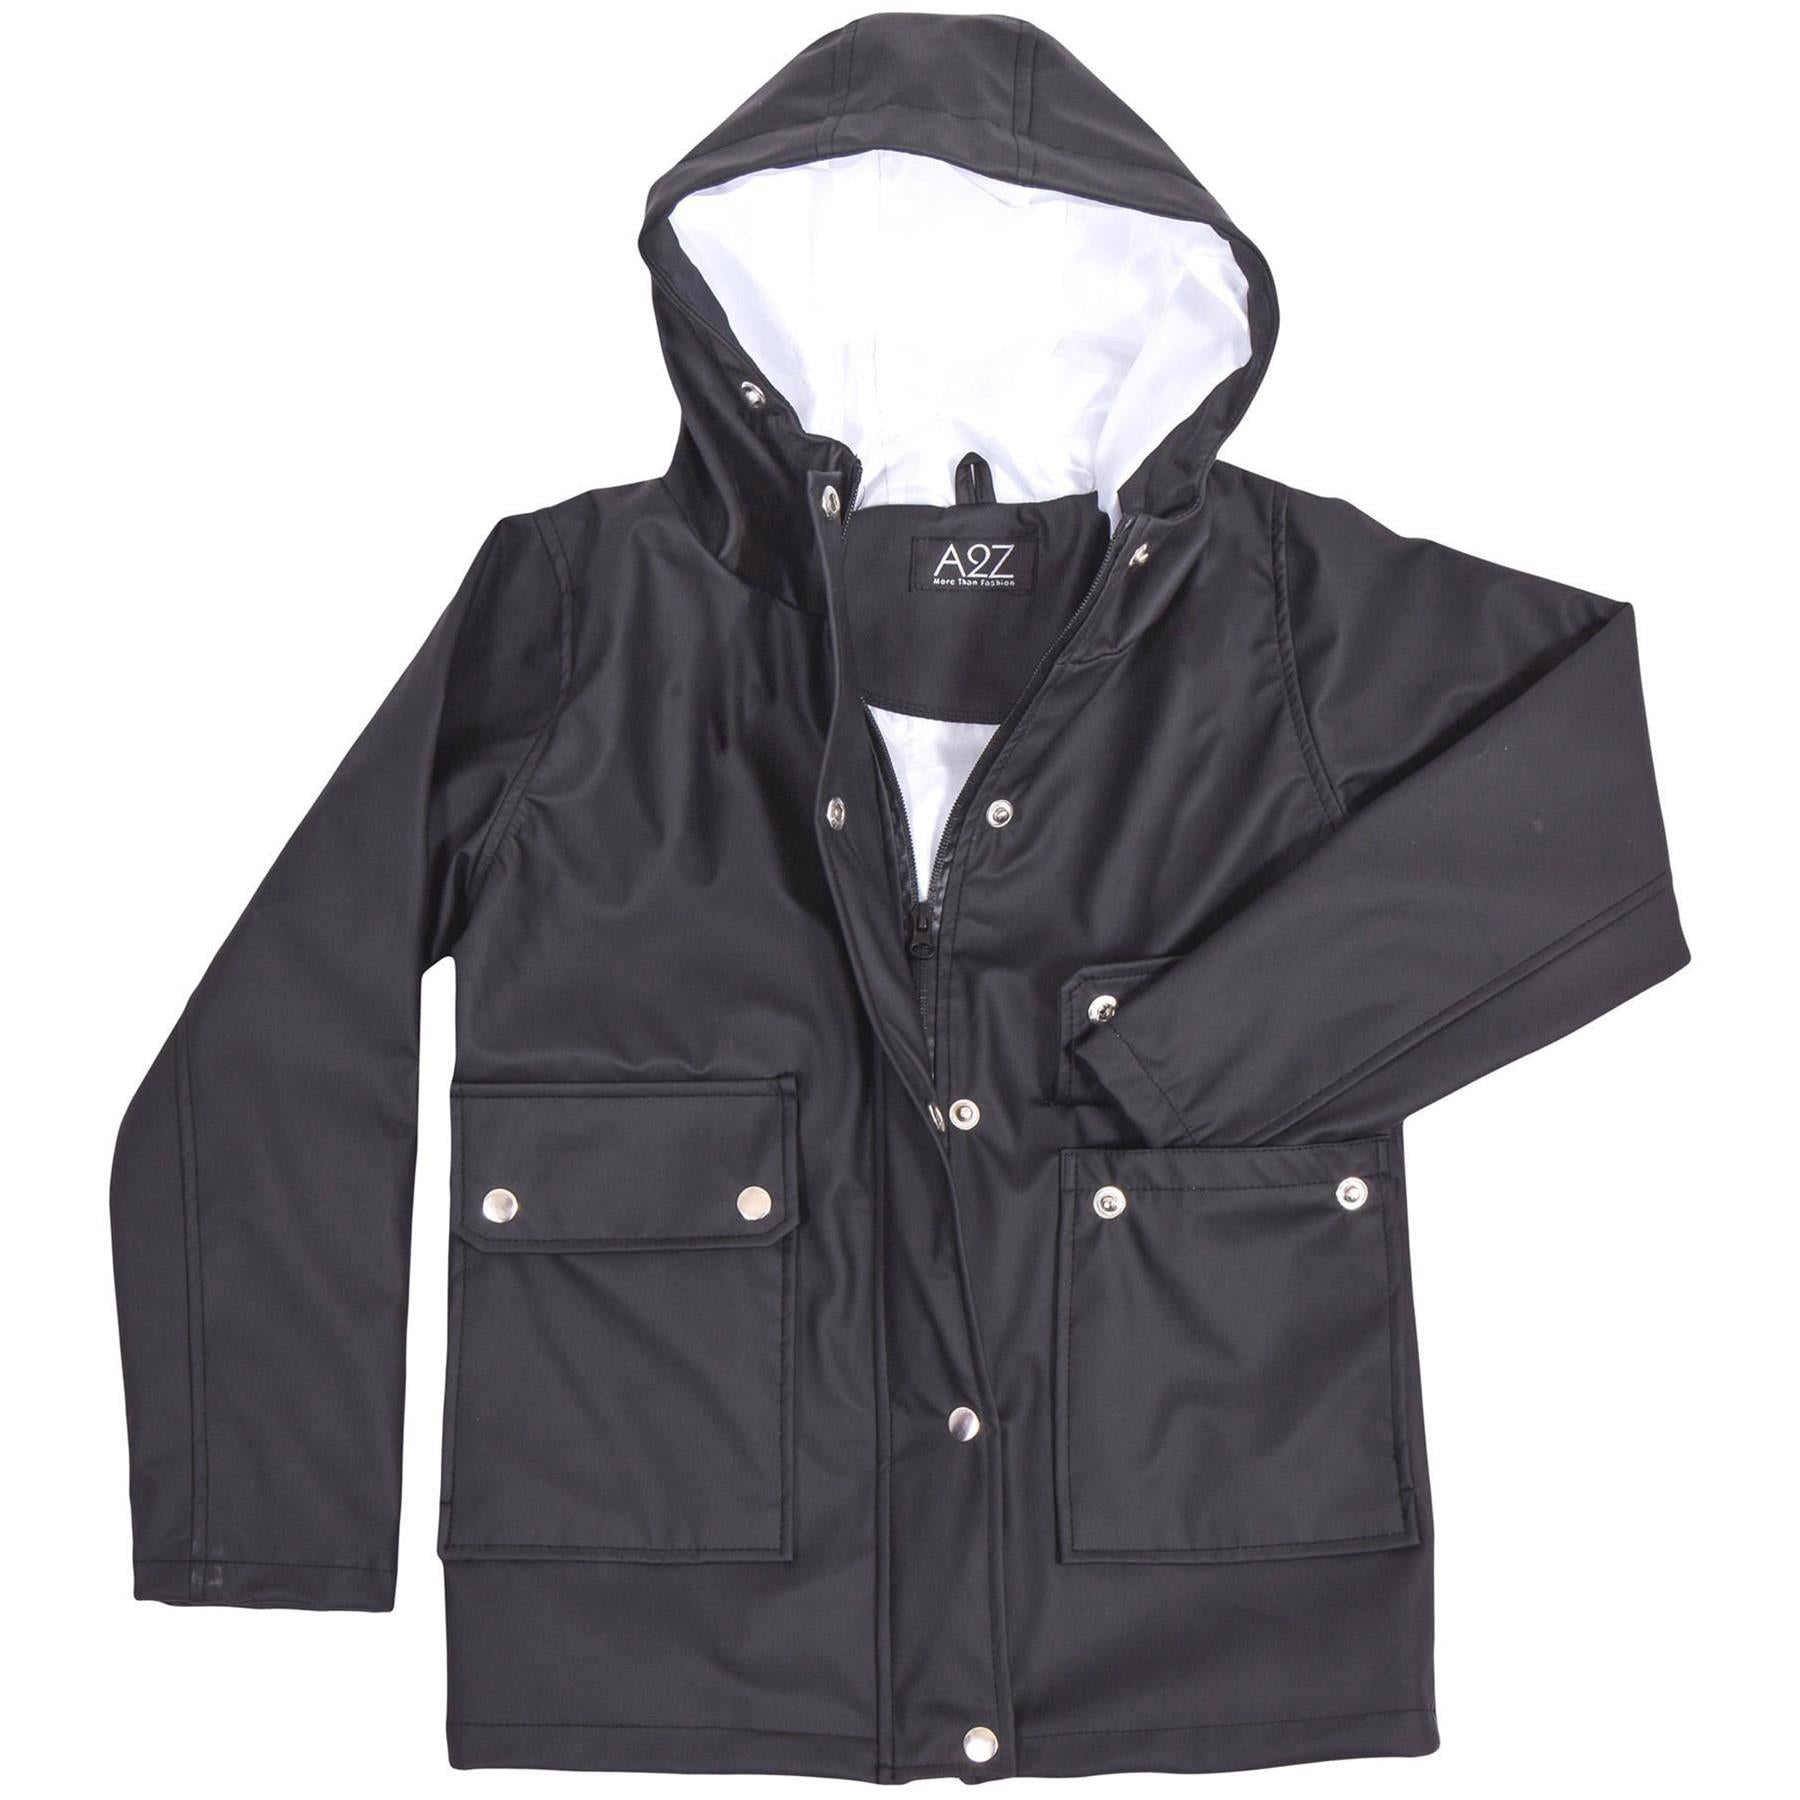 Girls Boys PU Raincoat Jacket Black Waterproof Coat